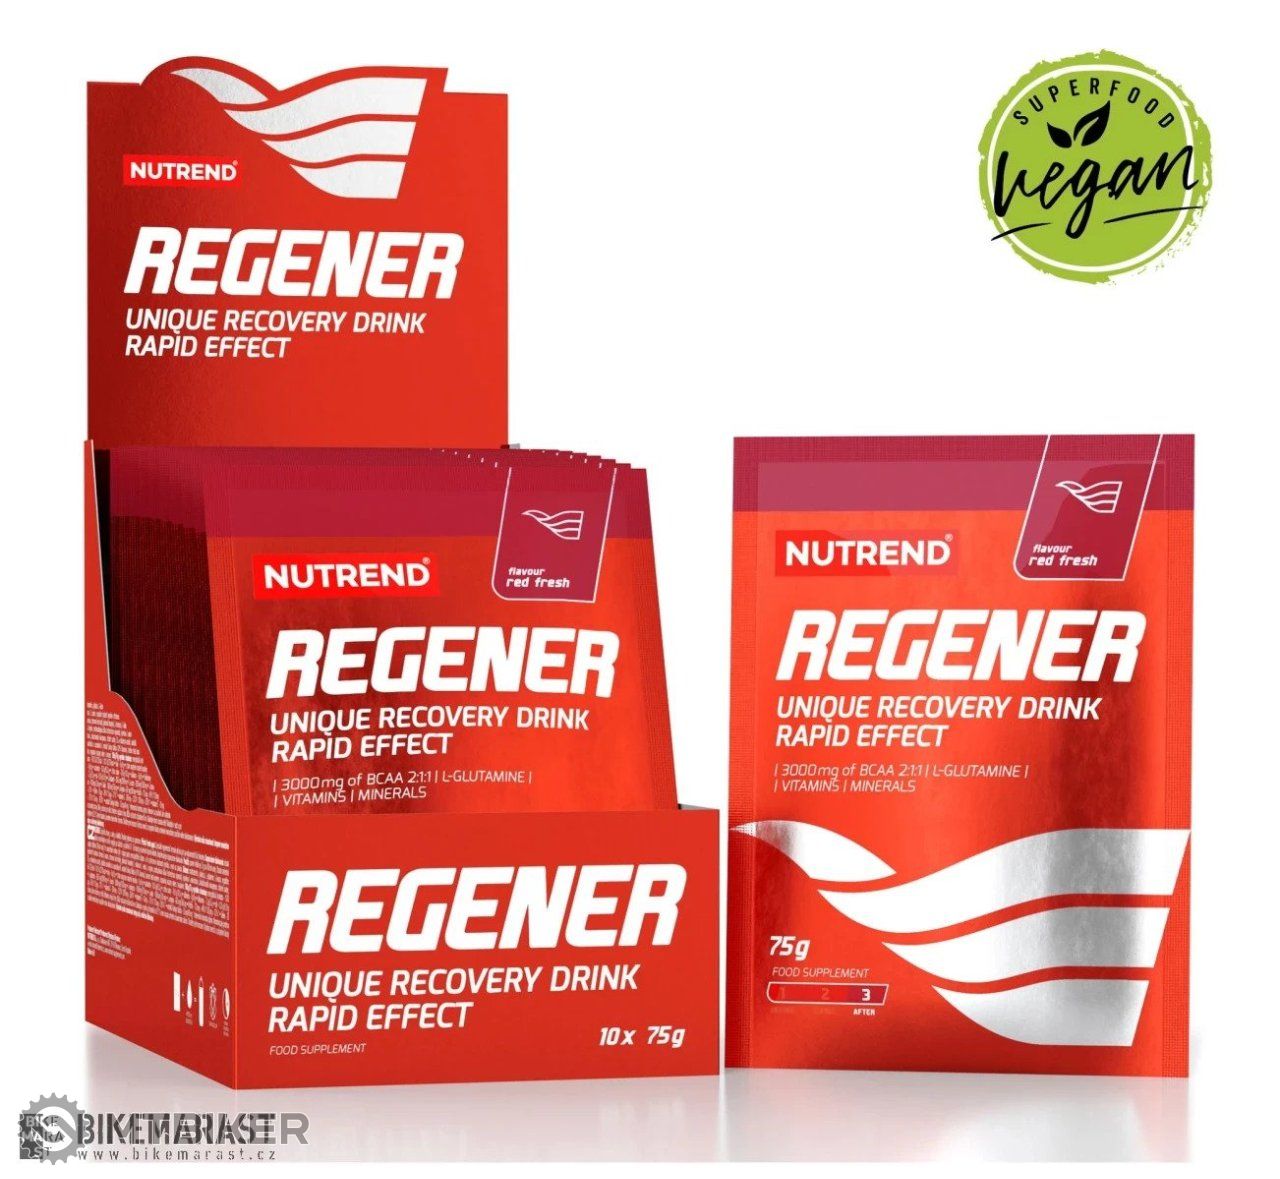 NUTREND REGENER regeneračný nápoj, 10 x 75 g